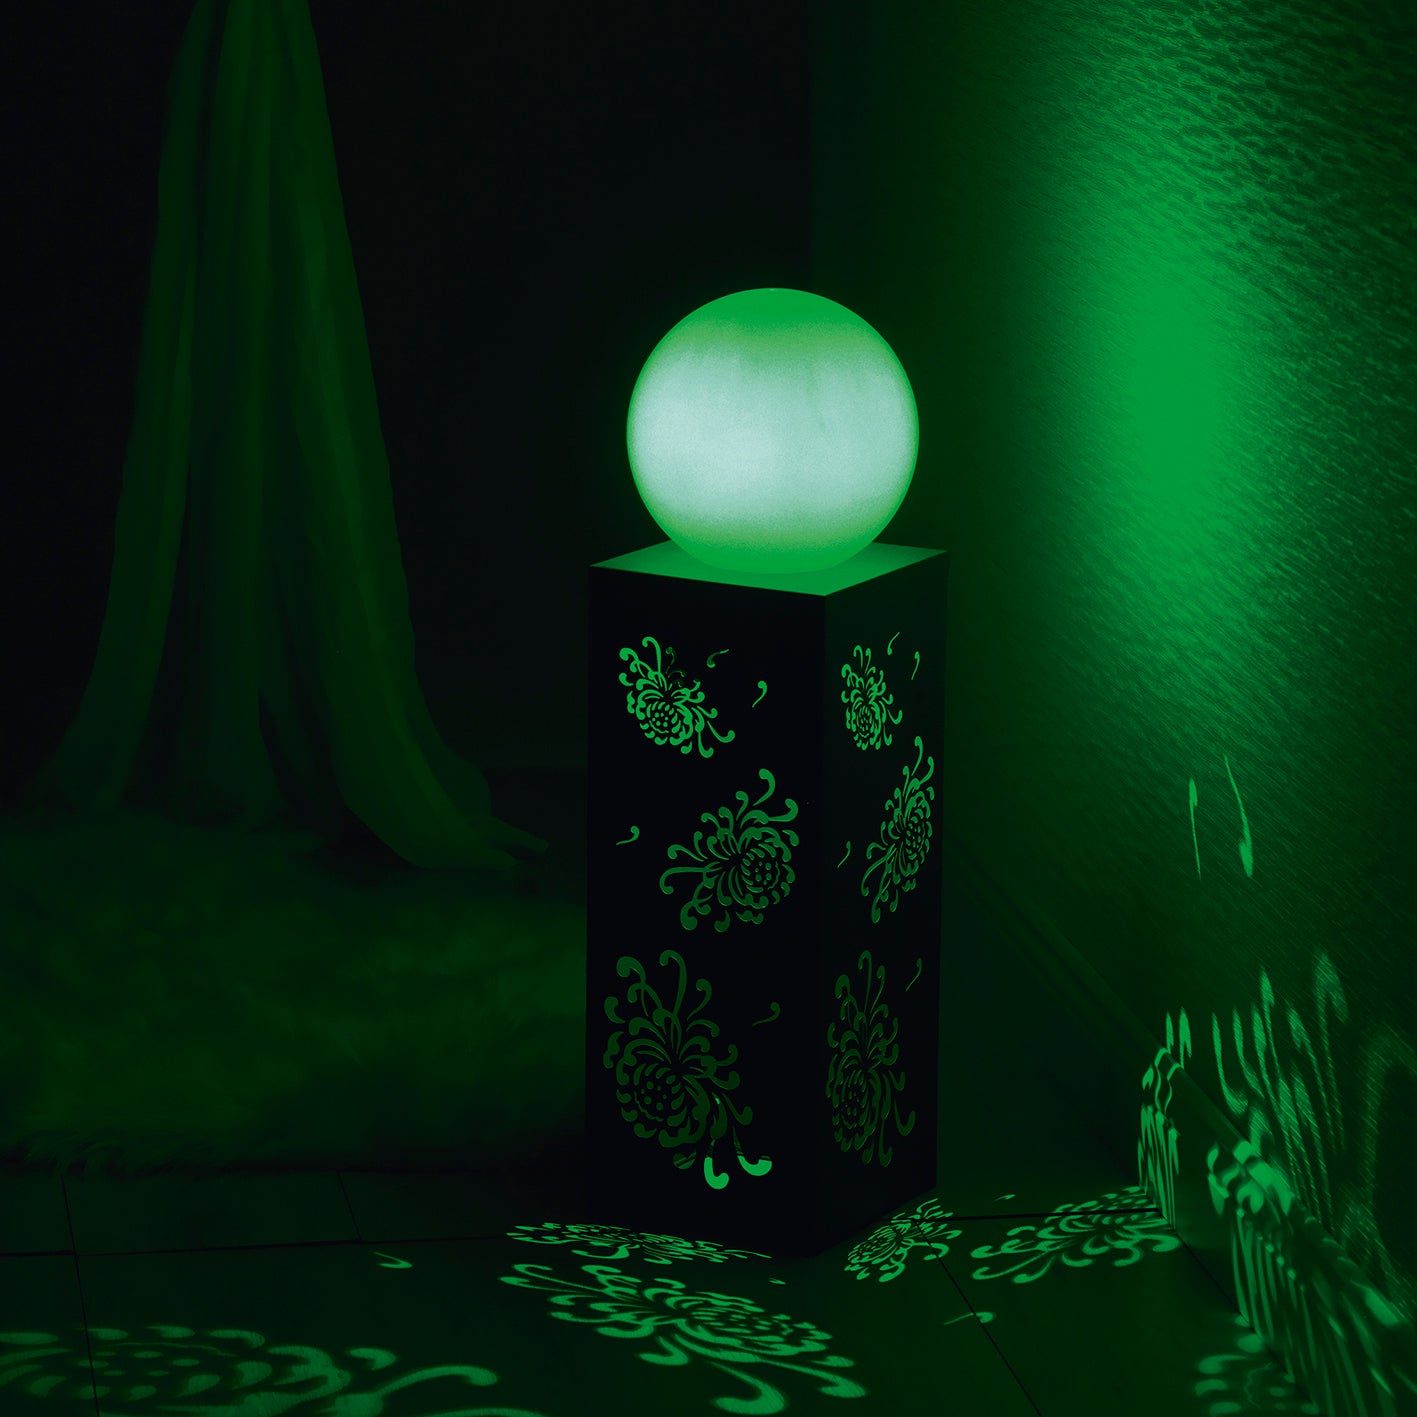 LED-Dekosäule "Bauernrose" inkl. Leuchtkugel - 65 cm - Rost-Optik